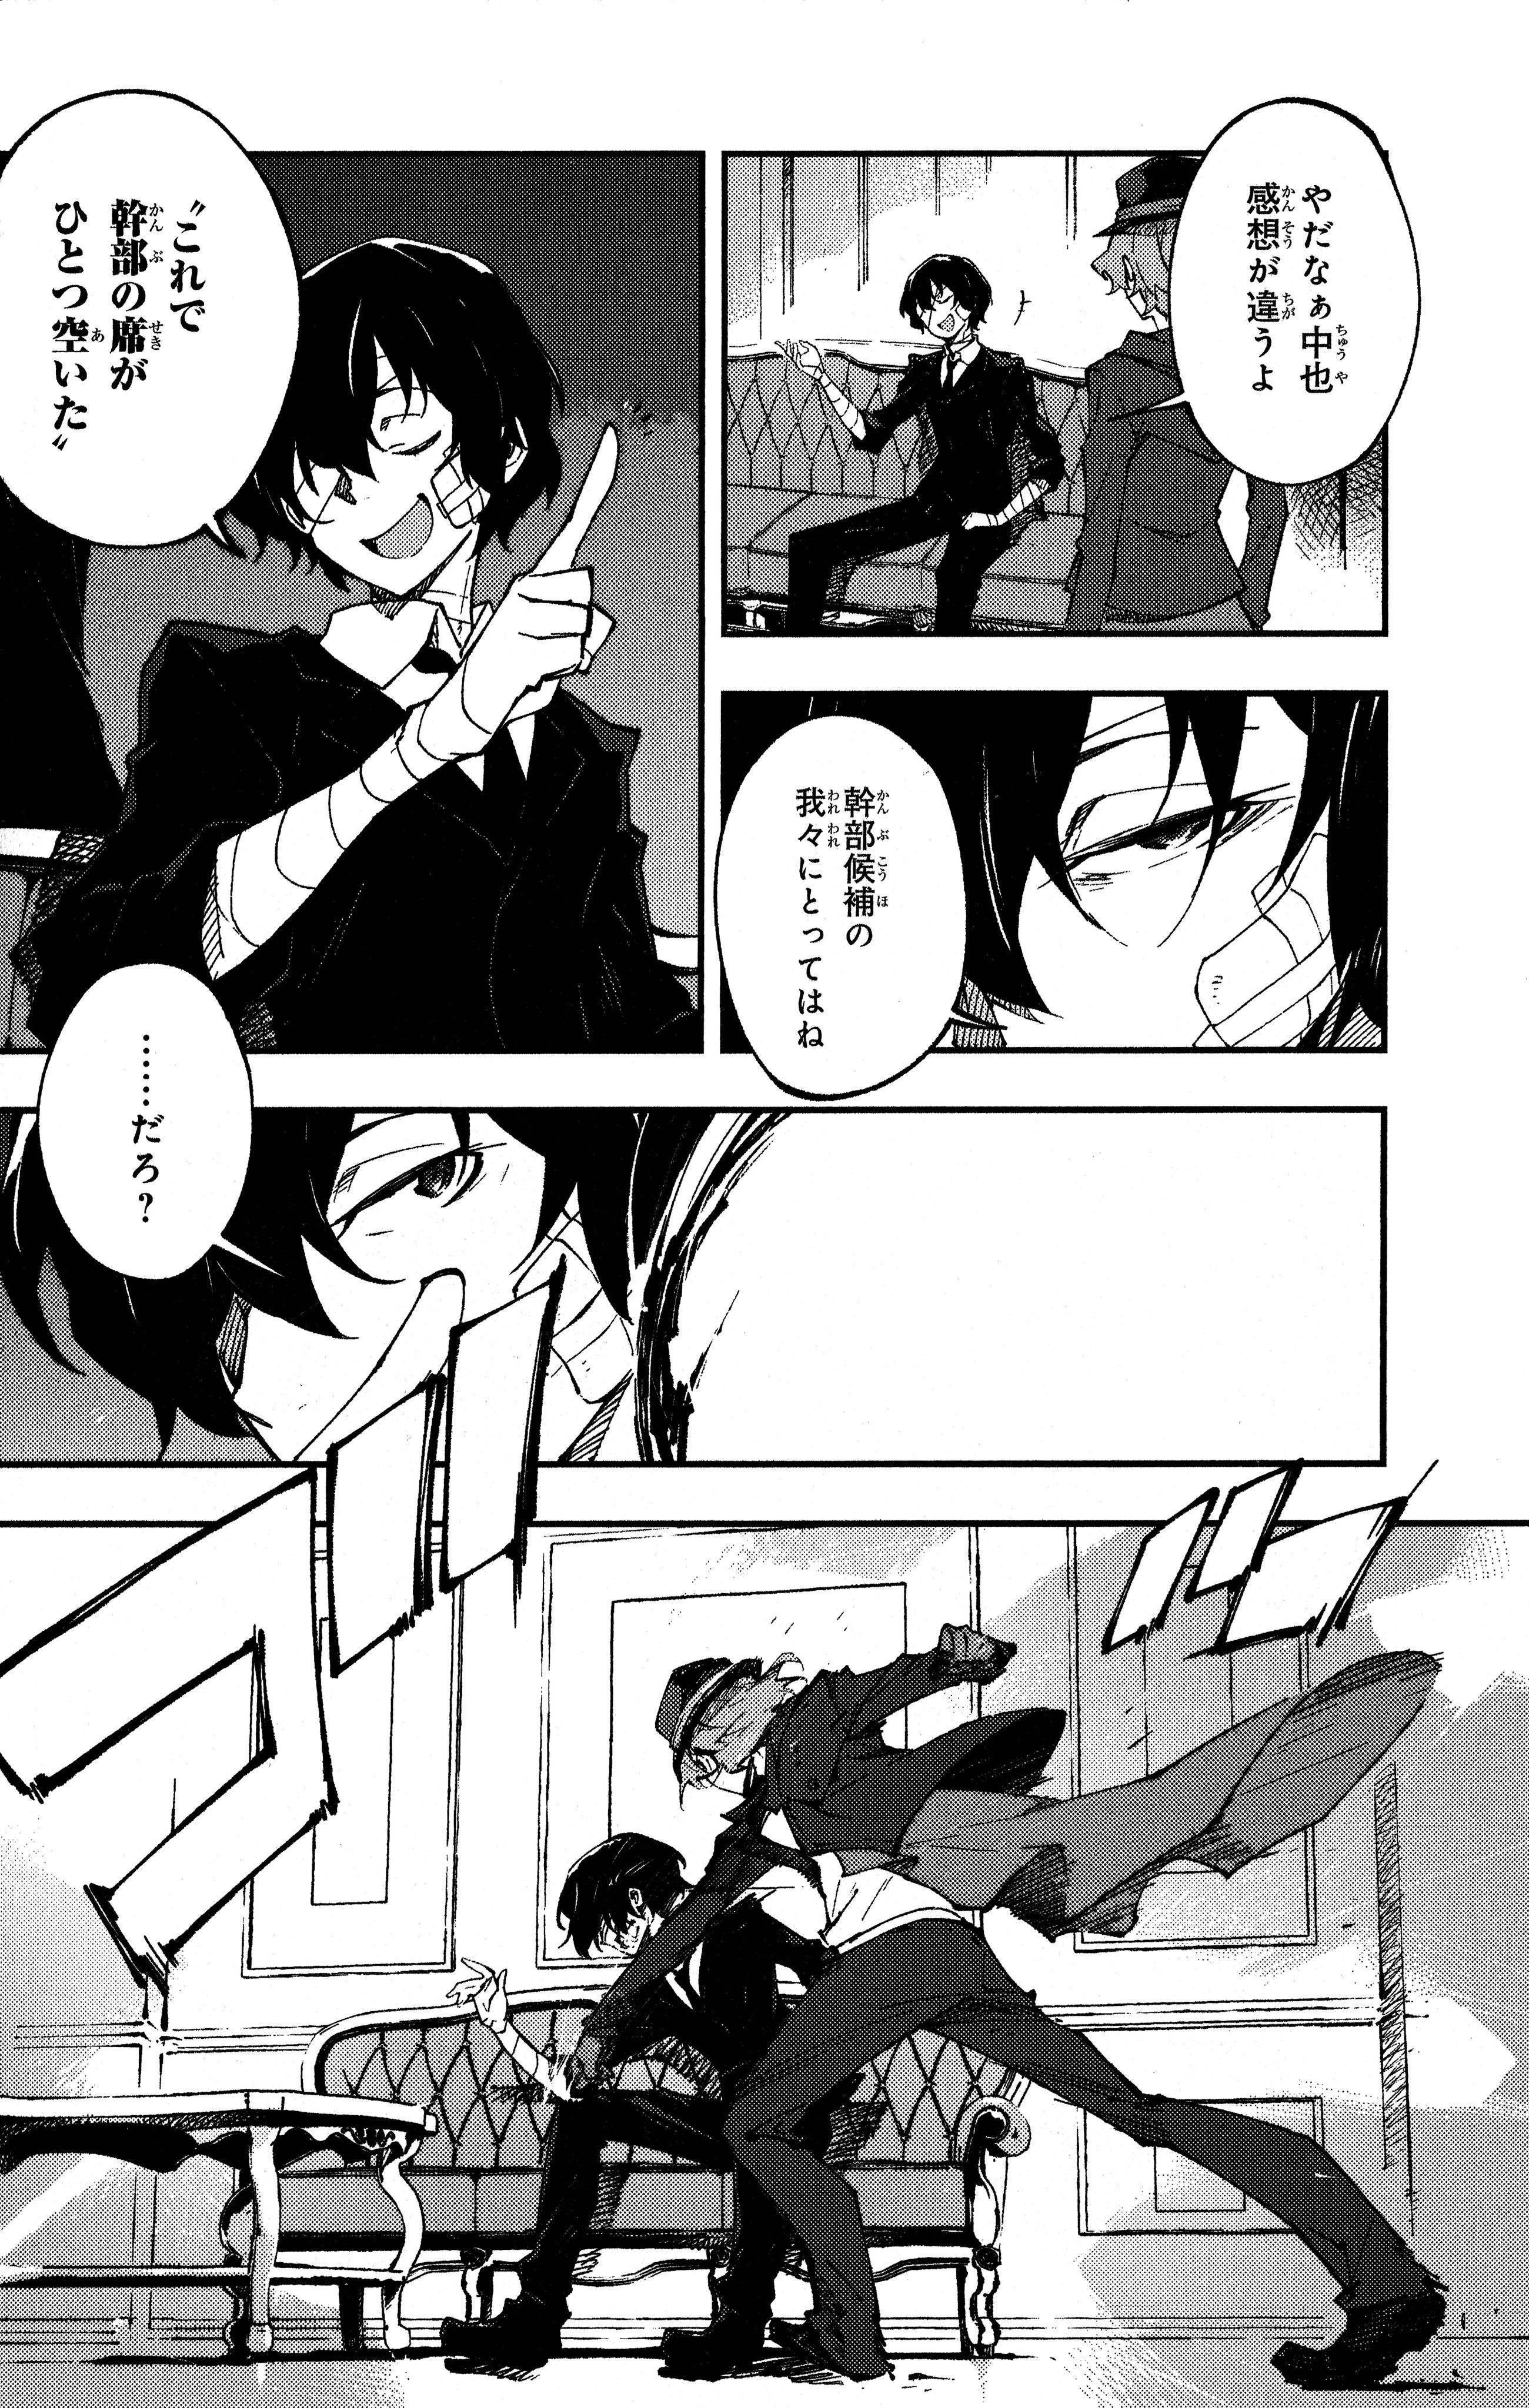 Bella Dazai Getting His Shit Rocked By Chuuya In The Dead Apple Manga Scanned T Co Am18khnmyr Twitter